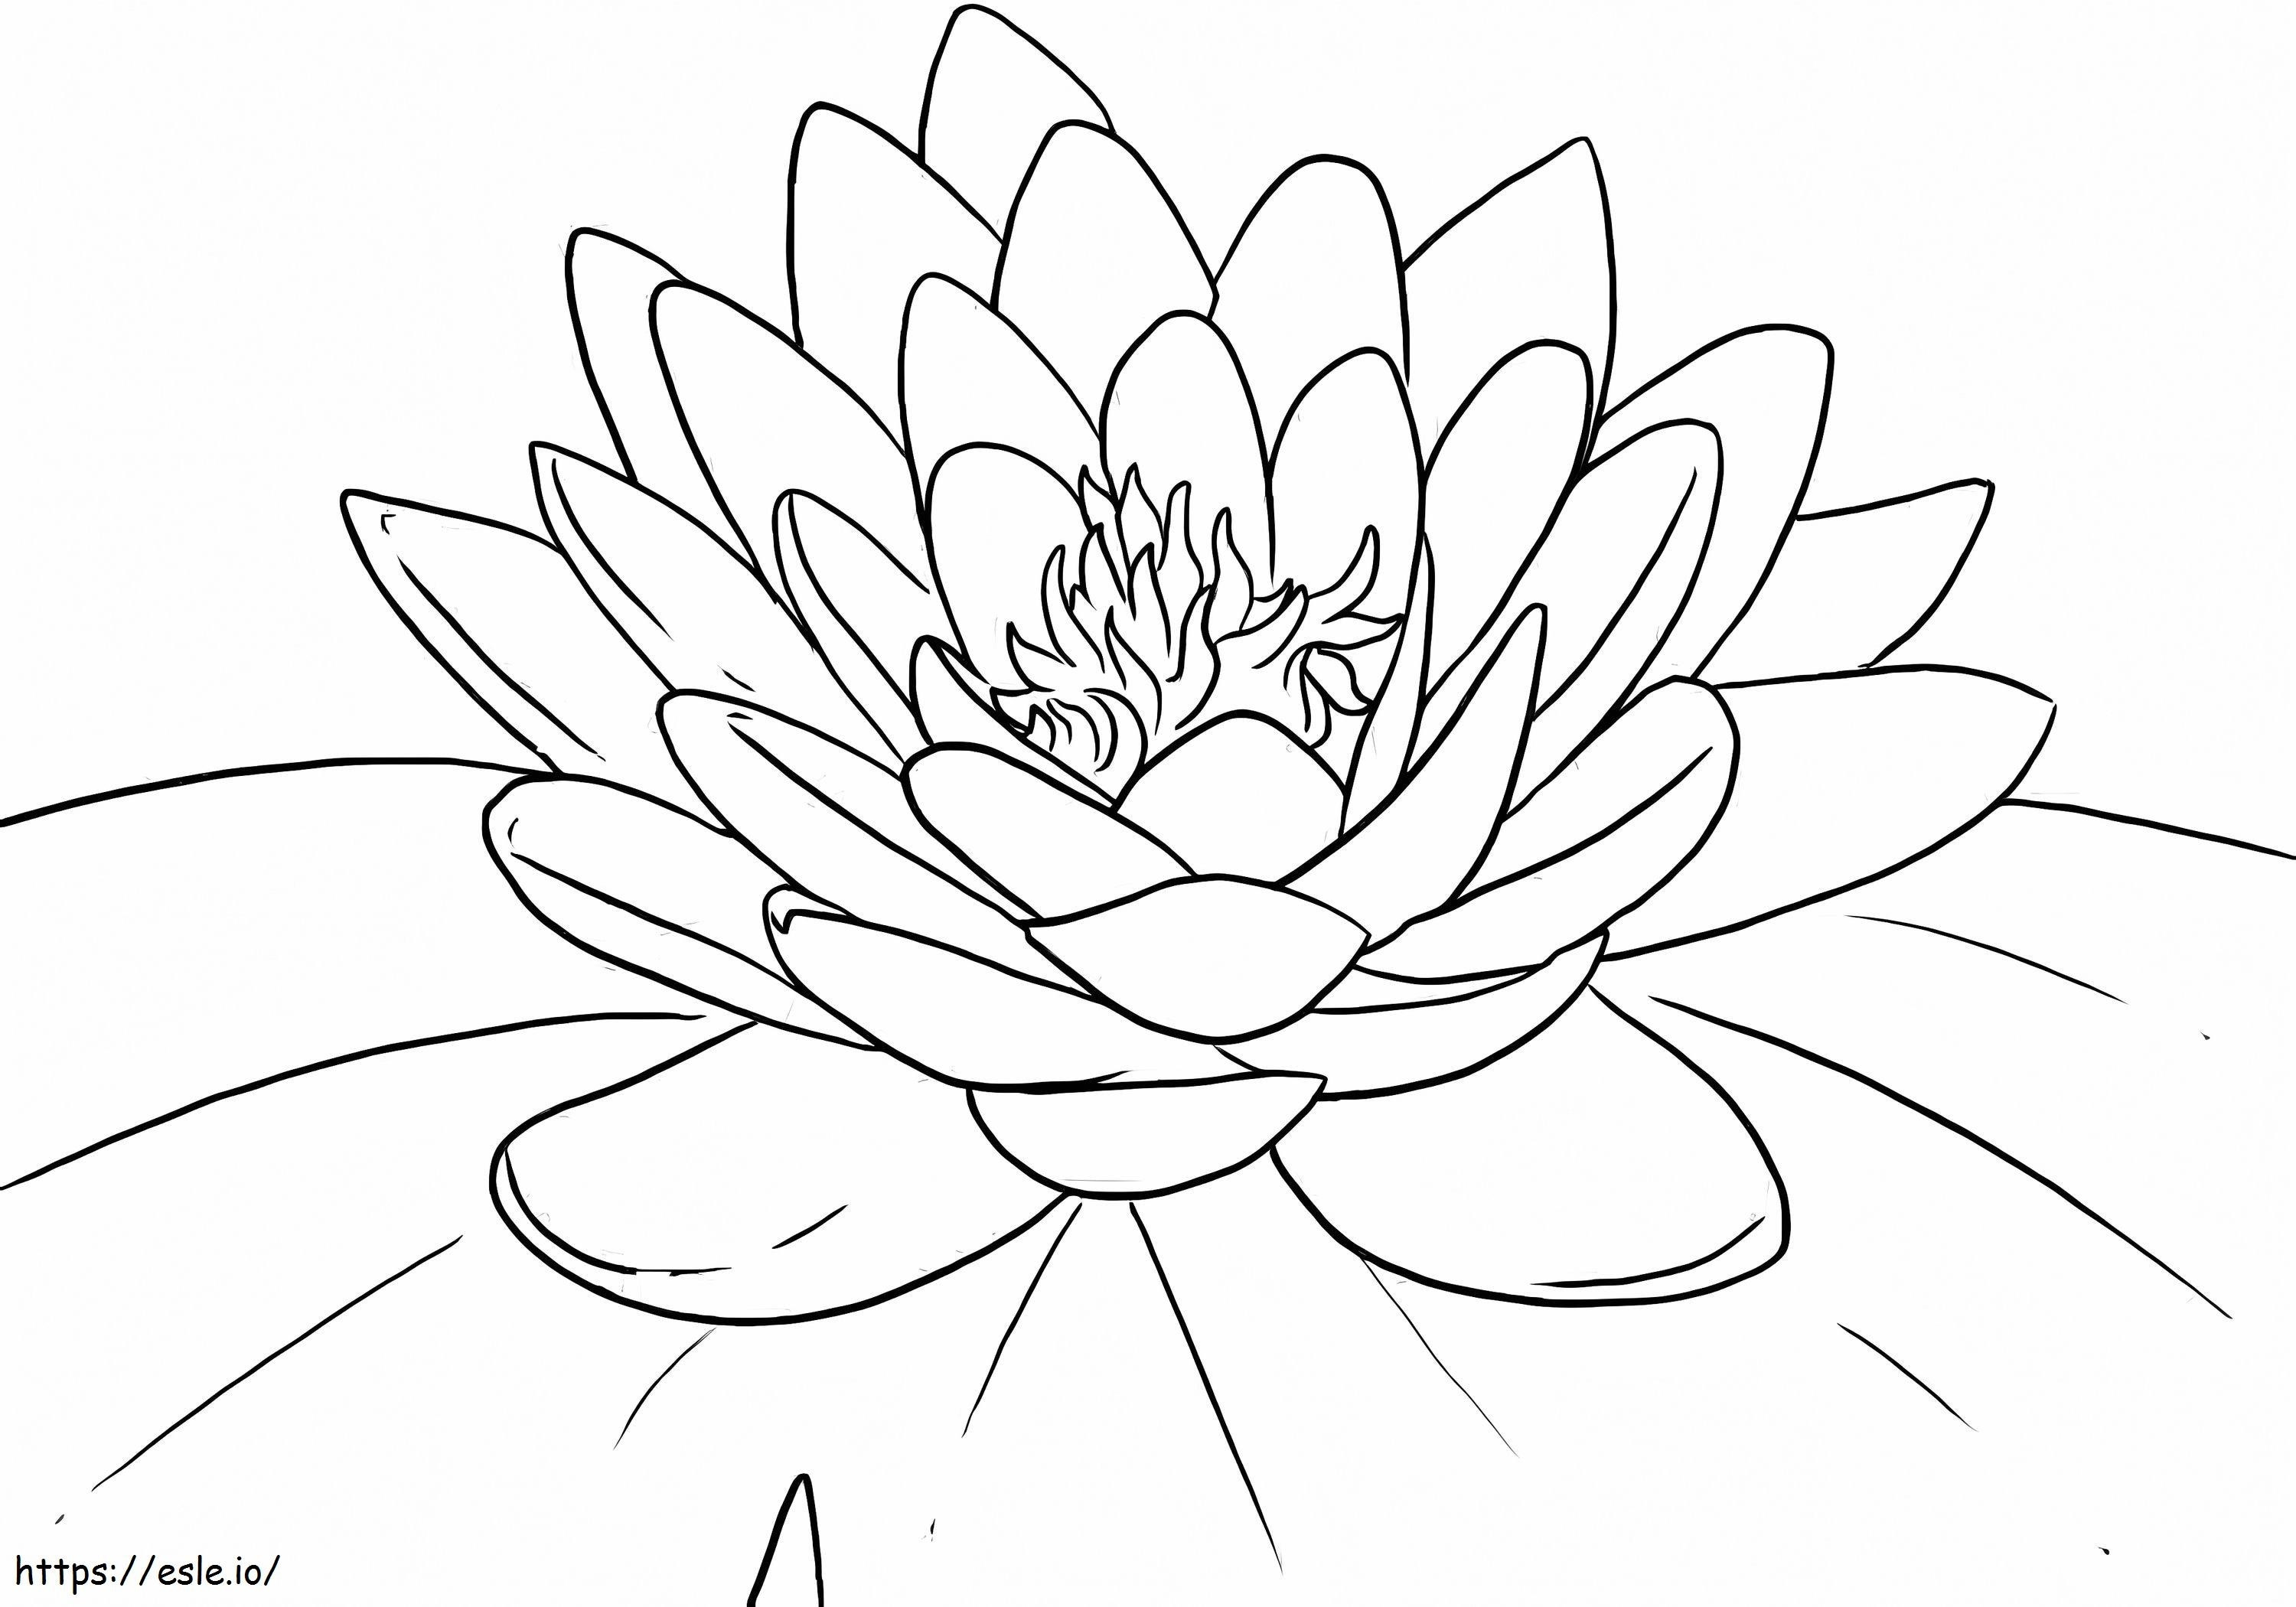 Coloriage Imprimer Lotus à imprimer dessin